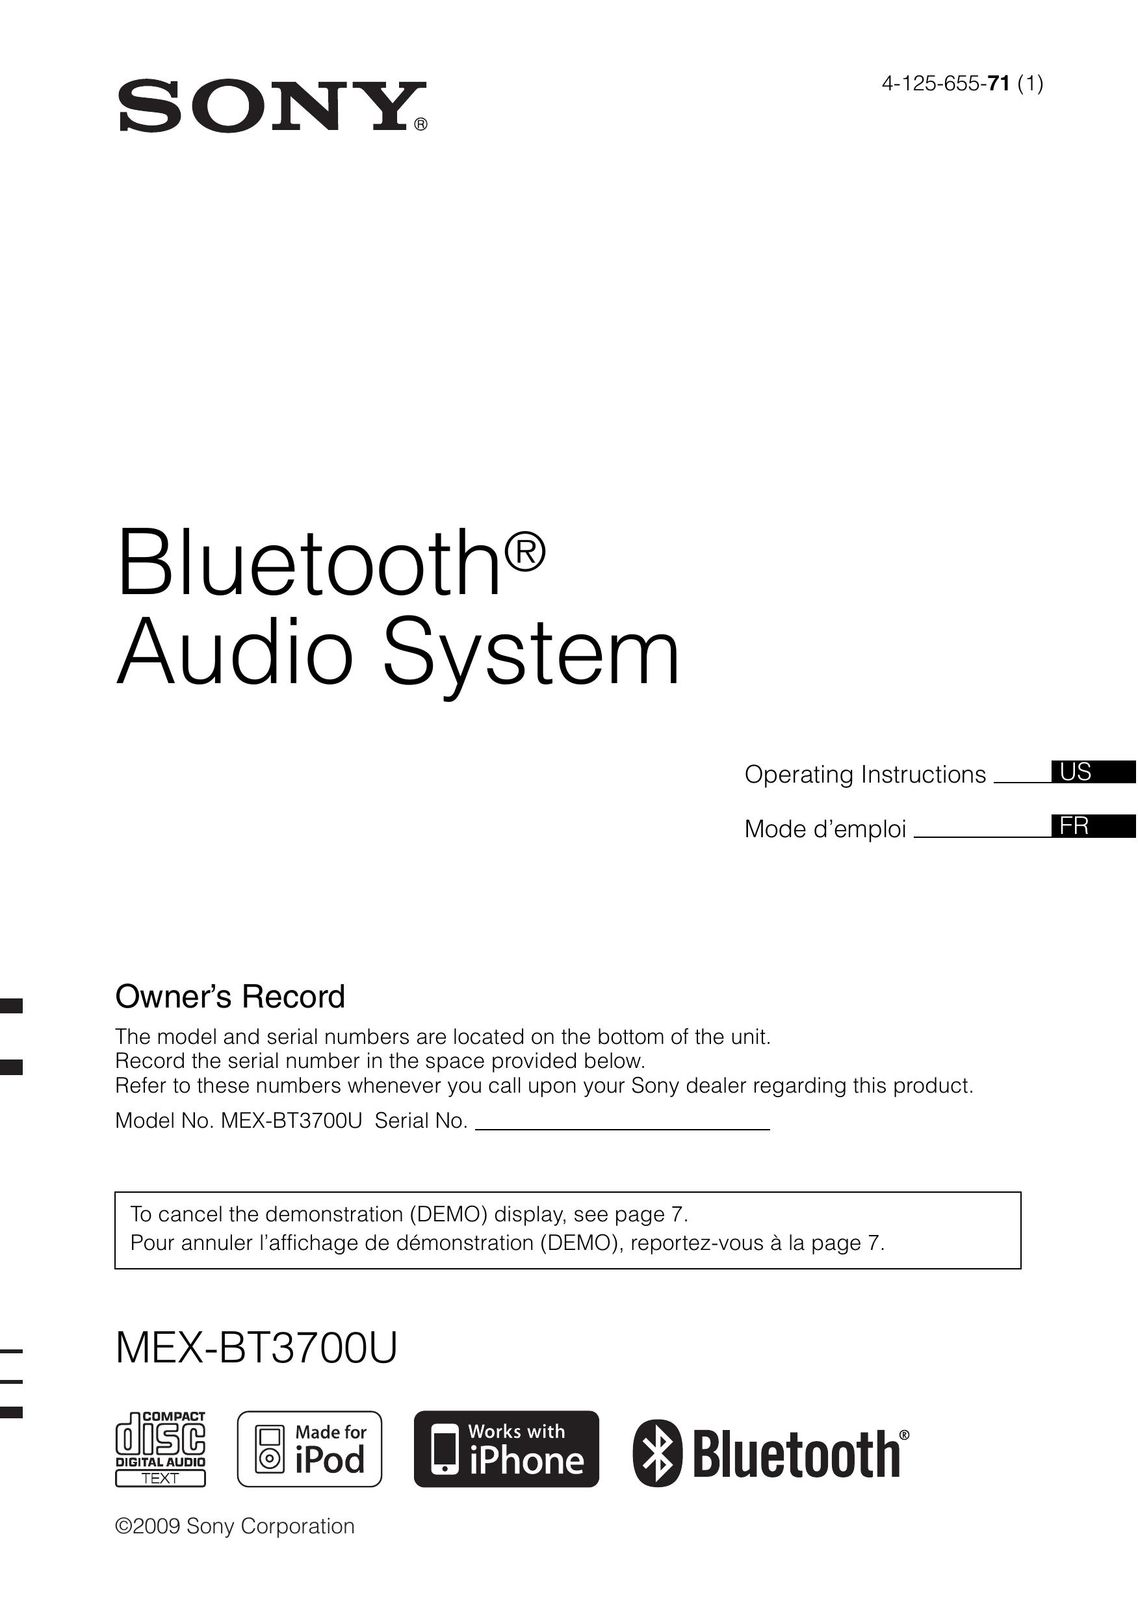 Sony MEX-BT3700U Bluetooth Headset User Manual